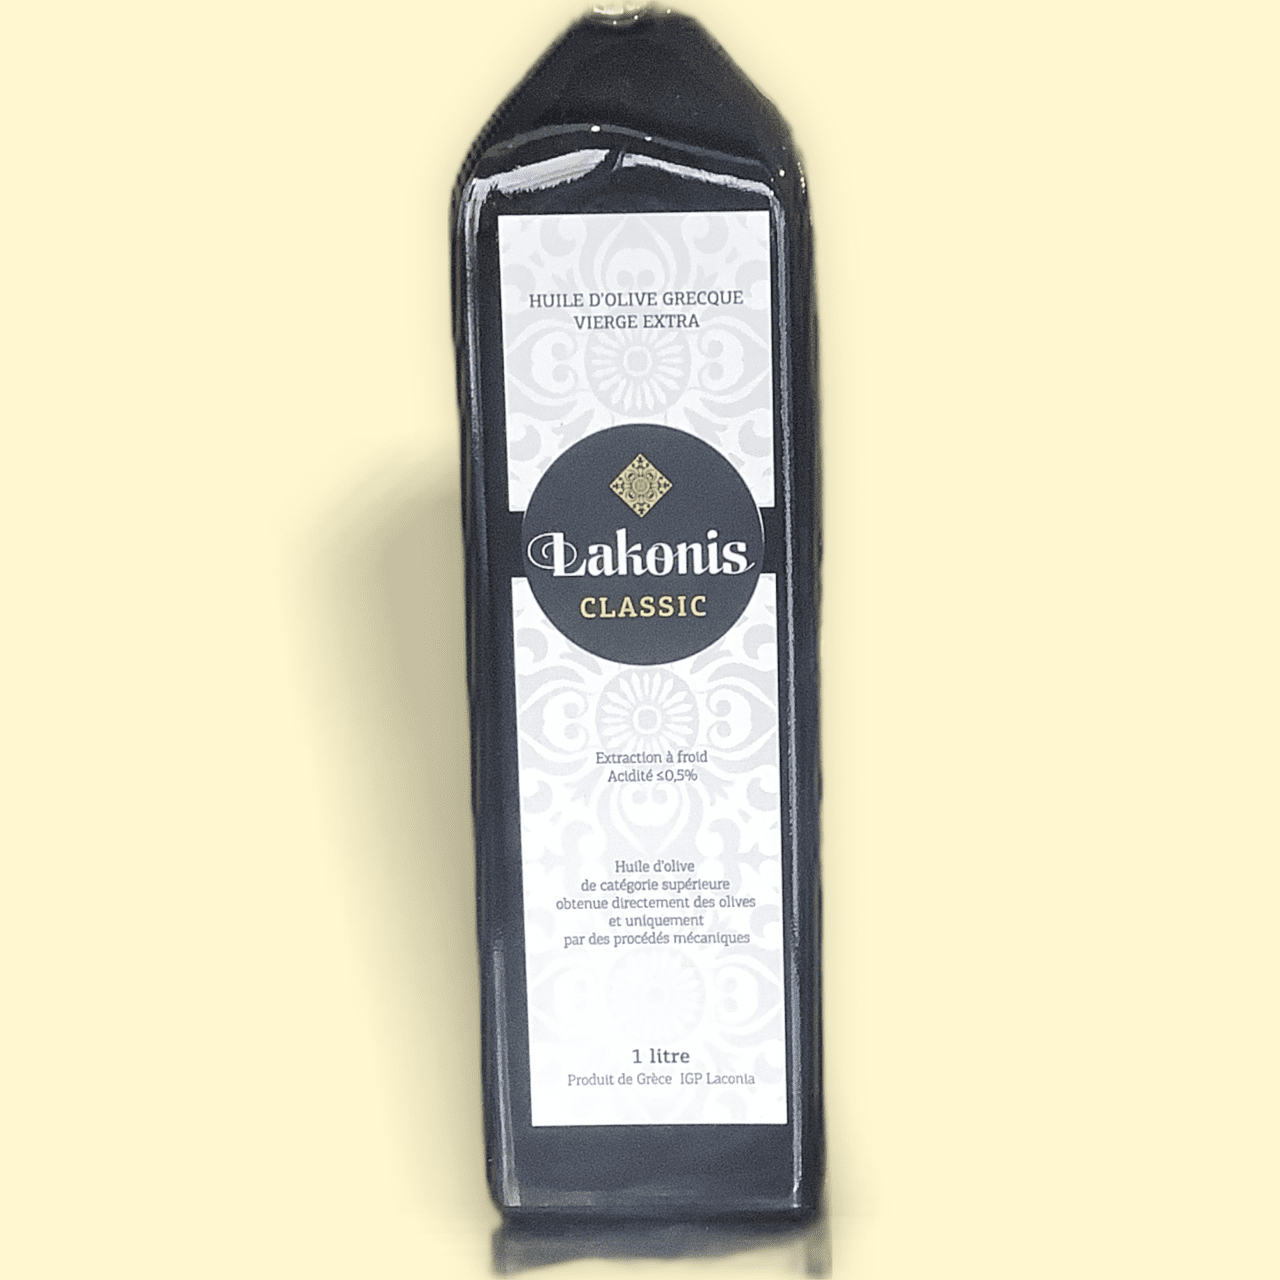 Huile d’olive lakonis classic